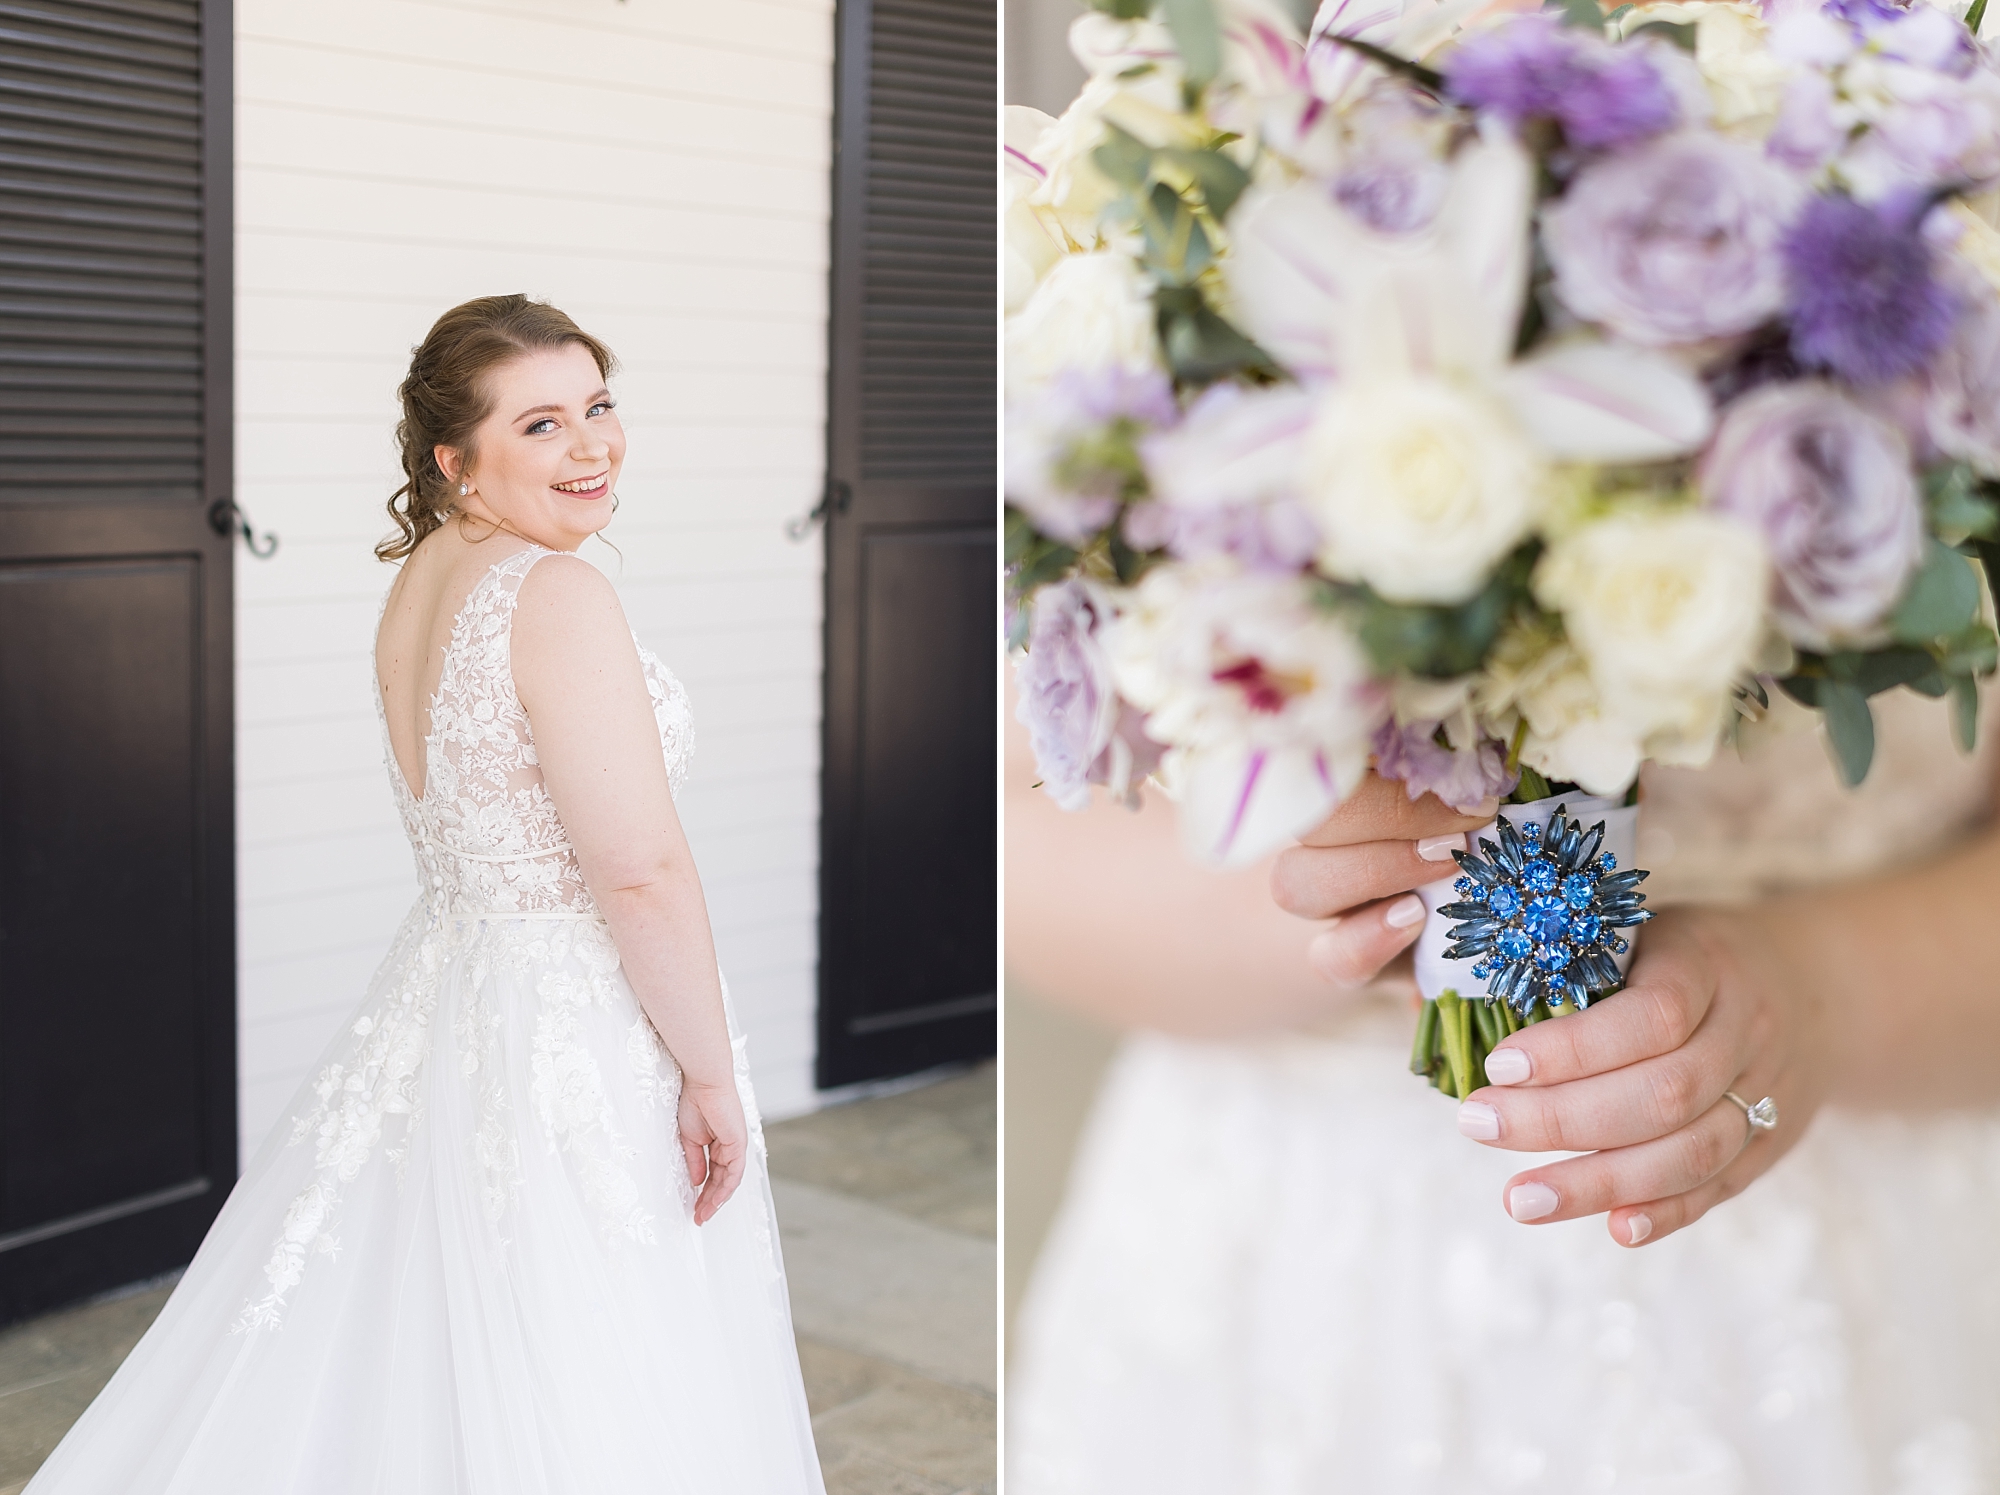 12 Oaks bride - Raleigh NC Wedding Photographer - Sarah Hinckley Photography